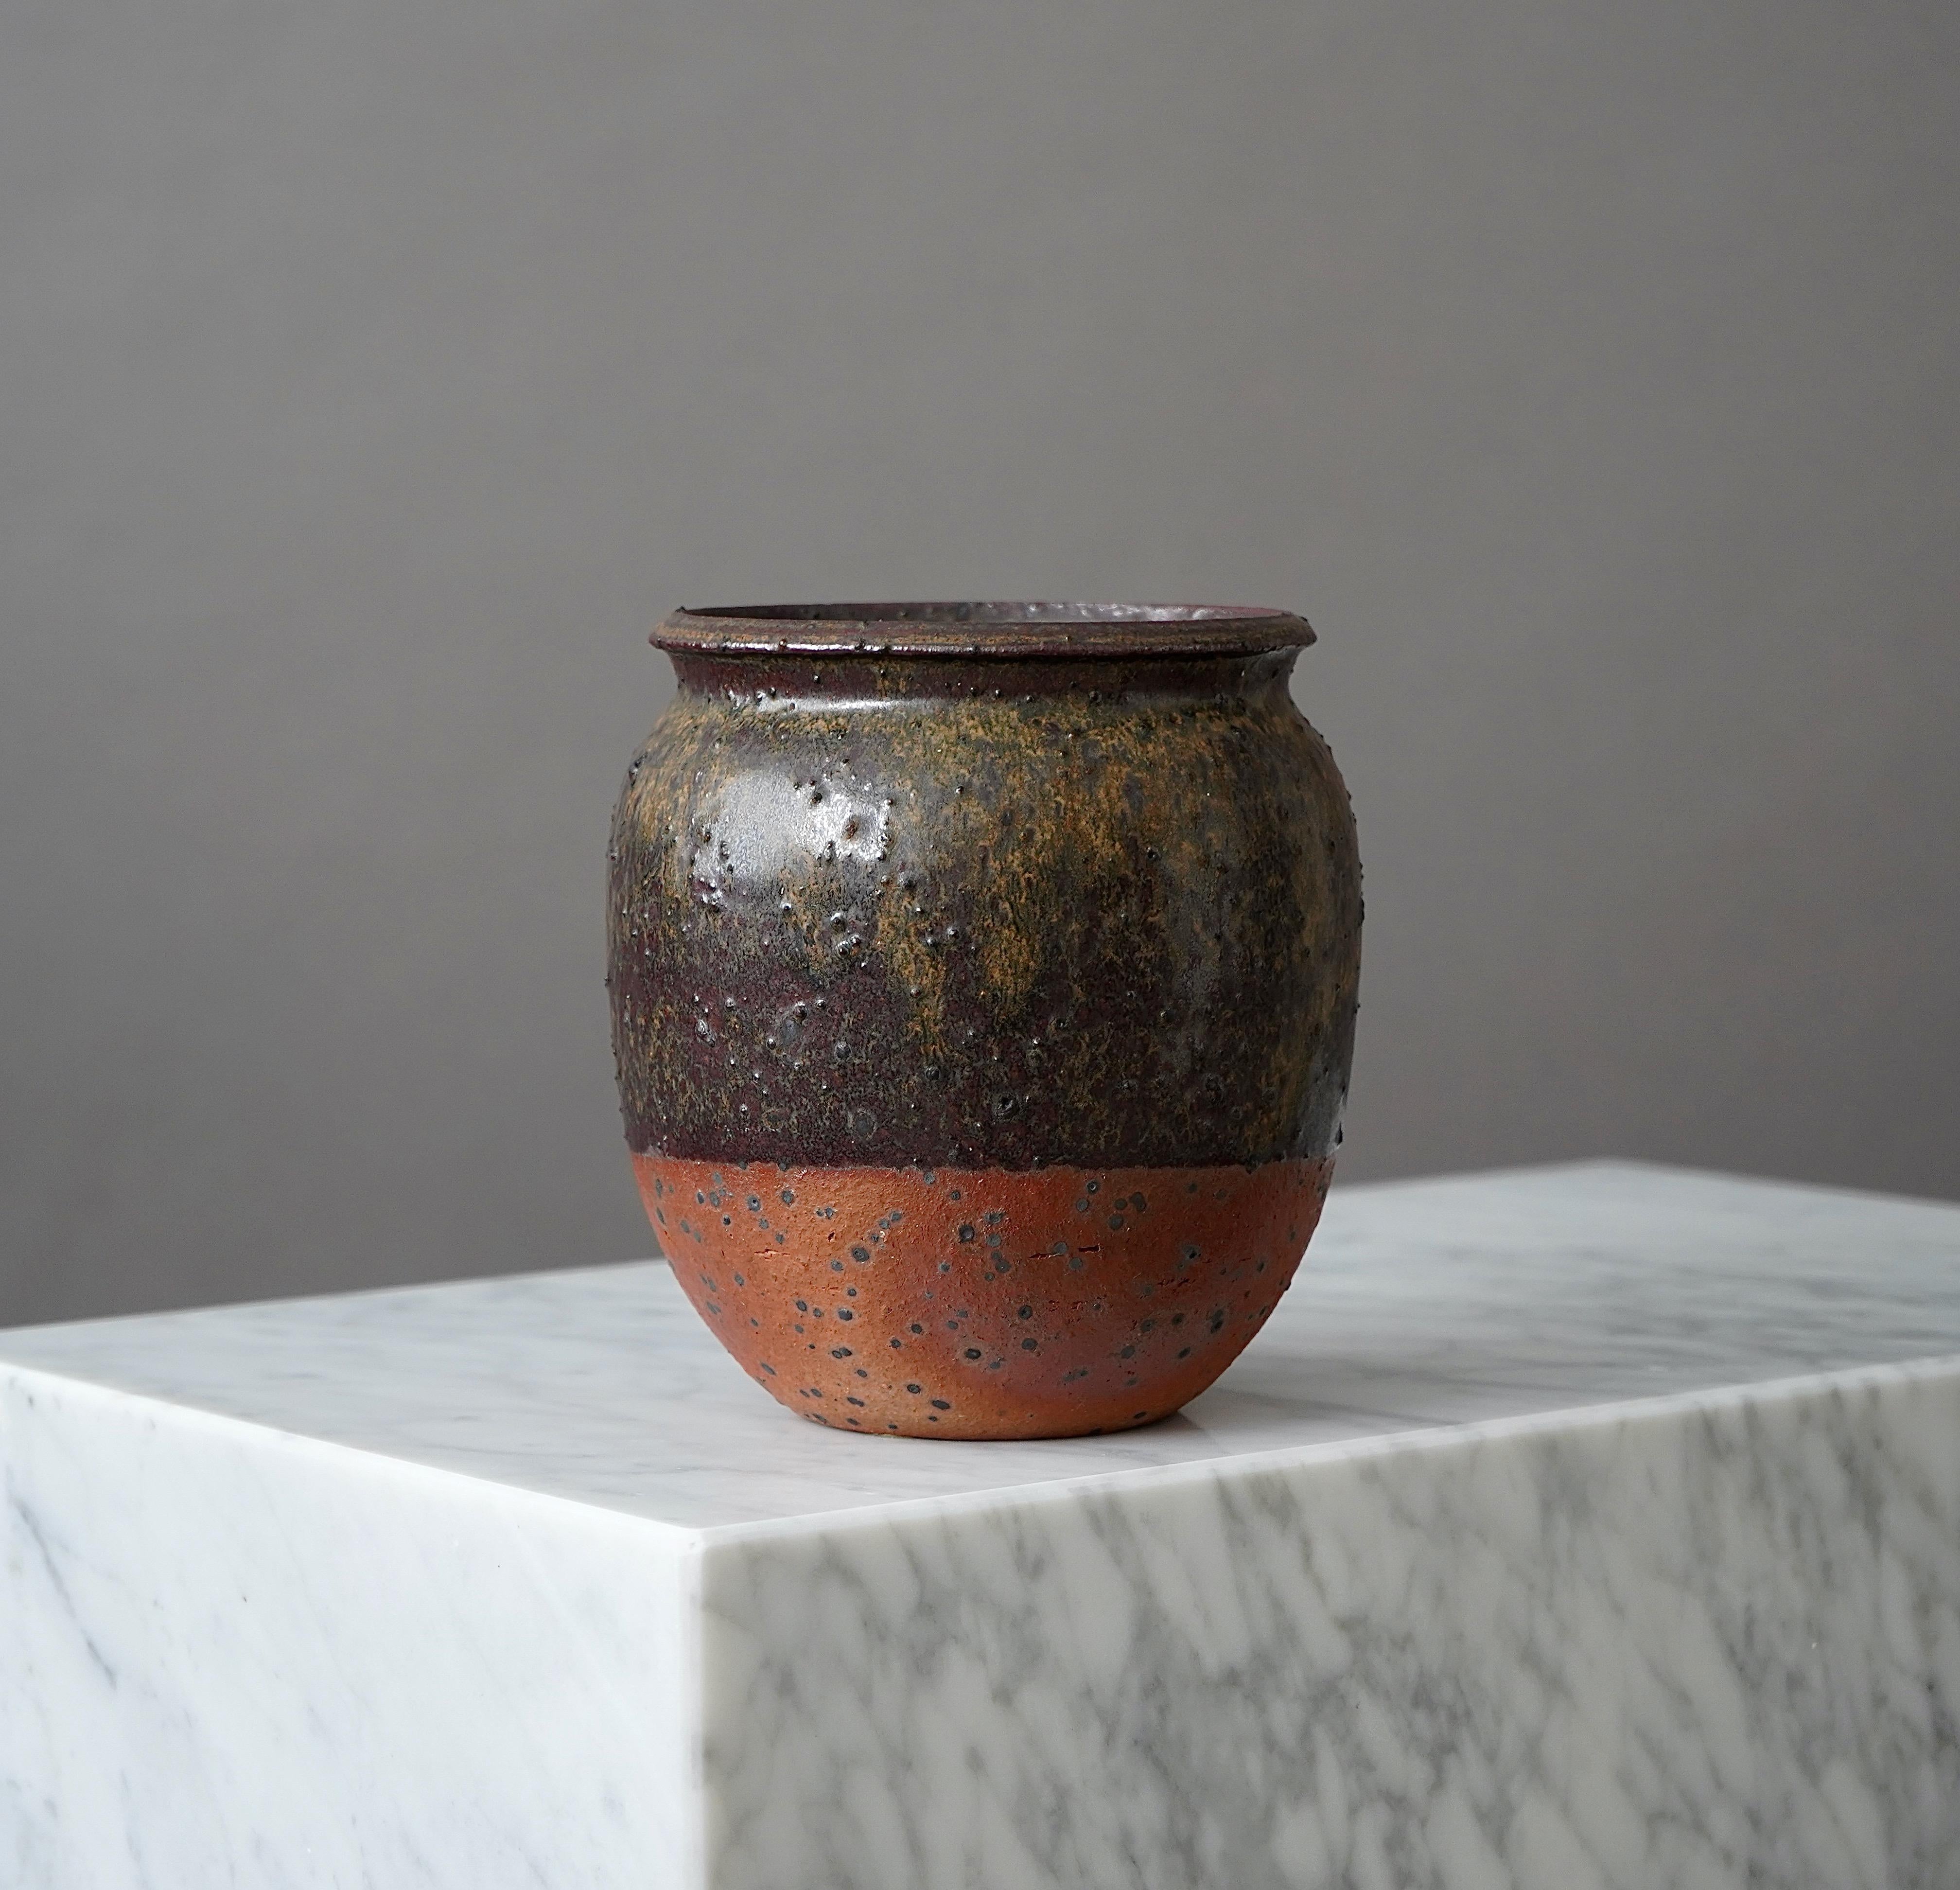 Scandinavian Modern Stoneware Vase by Swedish Ceramist Rolf Palm, 1974 For Sale